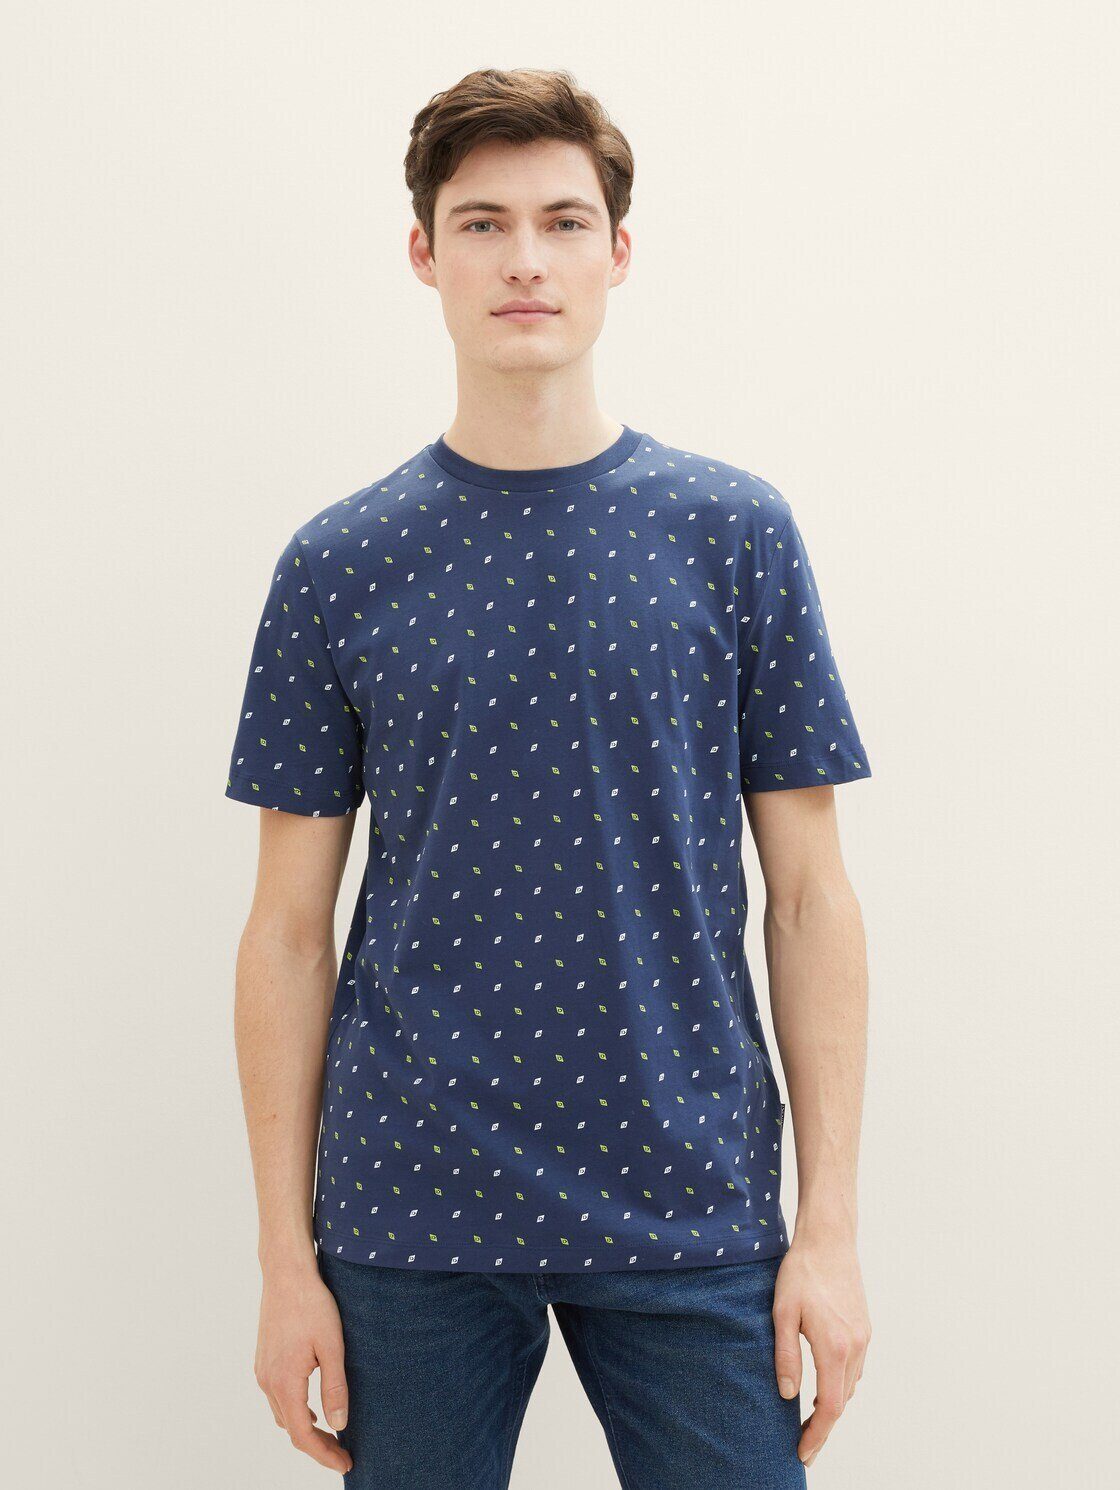 TOM TAILOR Denim T-Shirt T-Shirt mit Allover-Print dark blue triangle d print